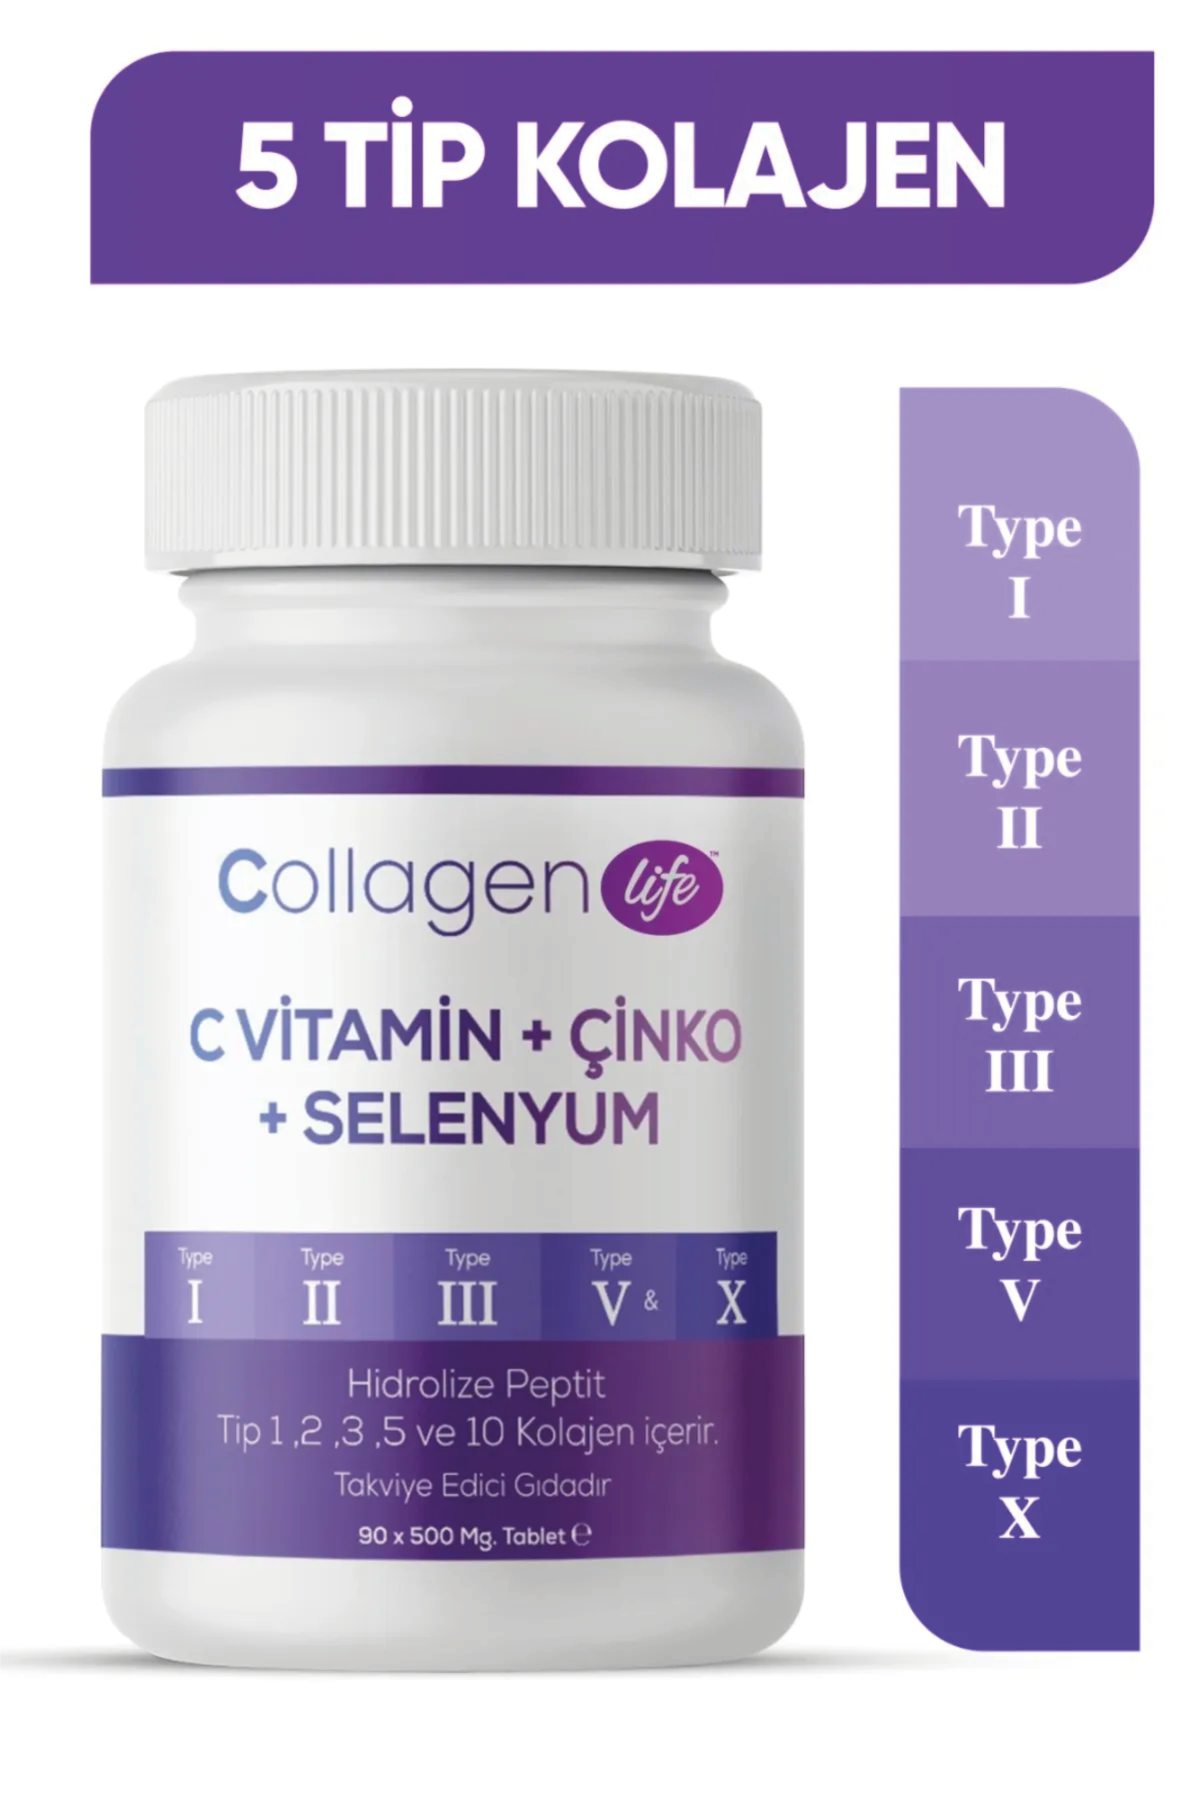 Collagen Life Pro 90 Tablet Kolajen